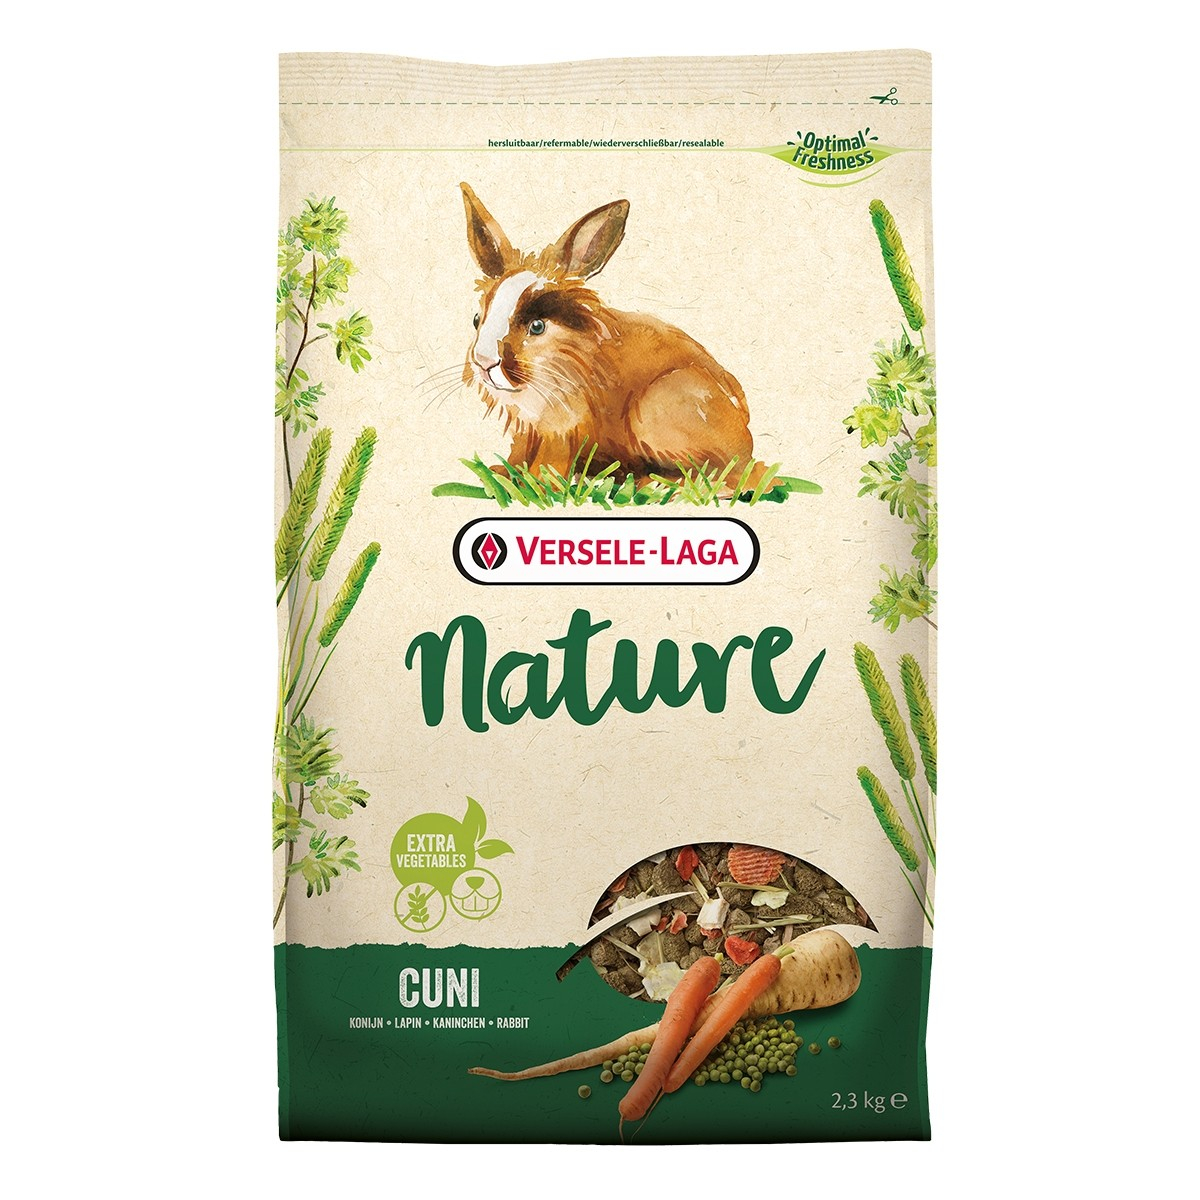 Versele Laga Nature Cuni alimento para conejos